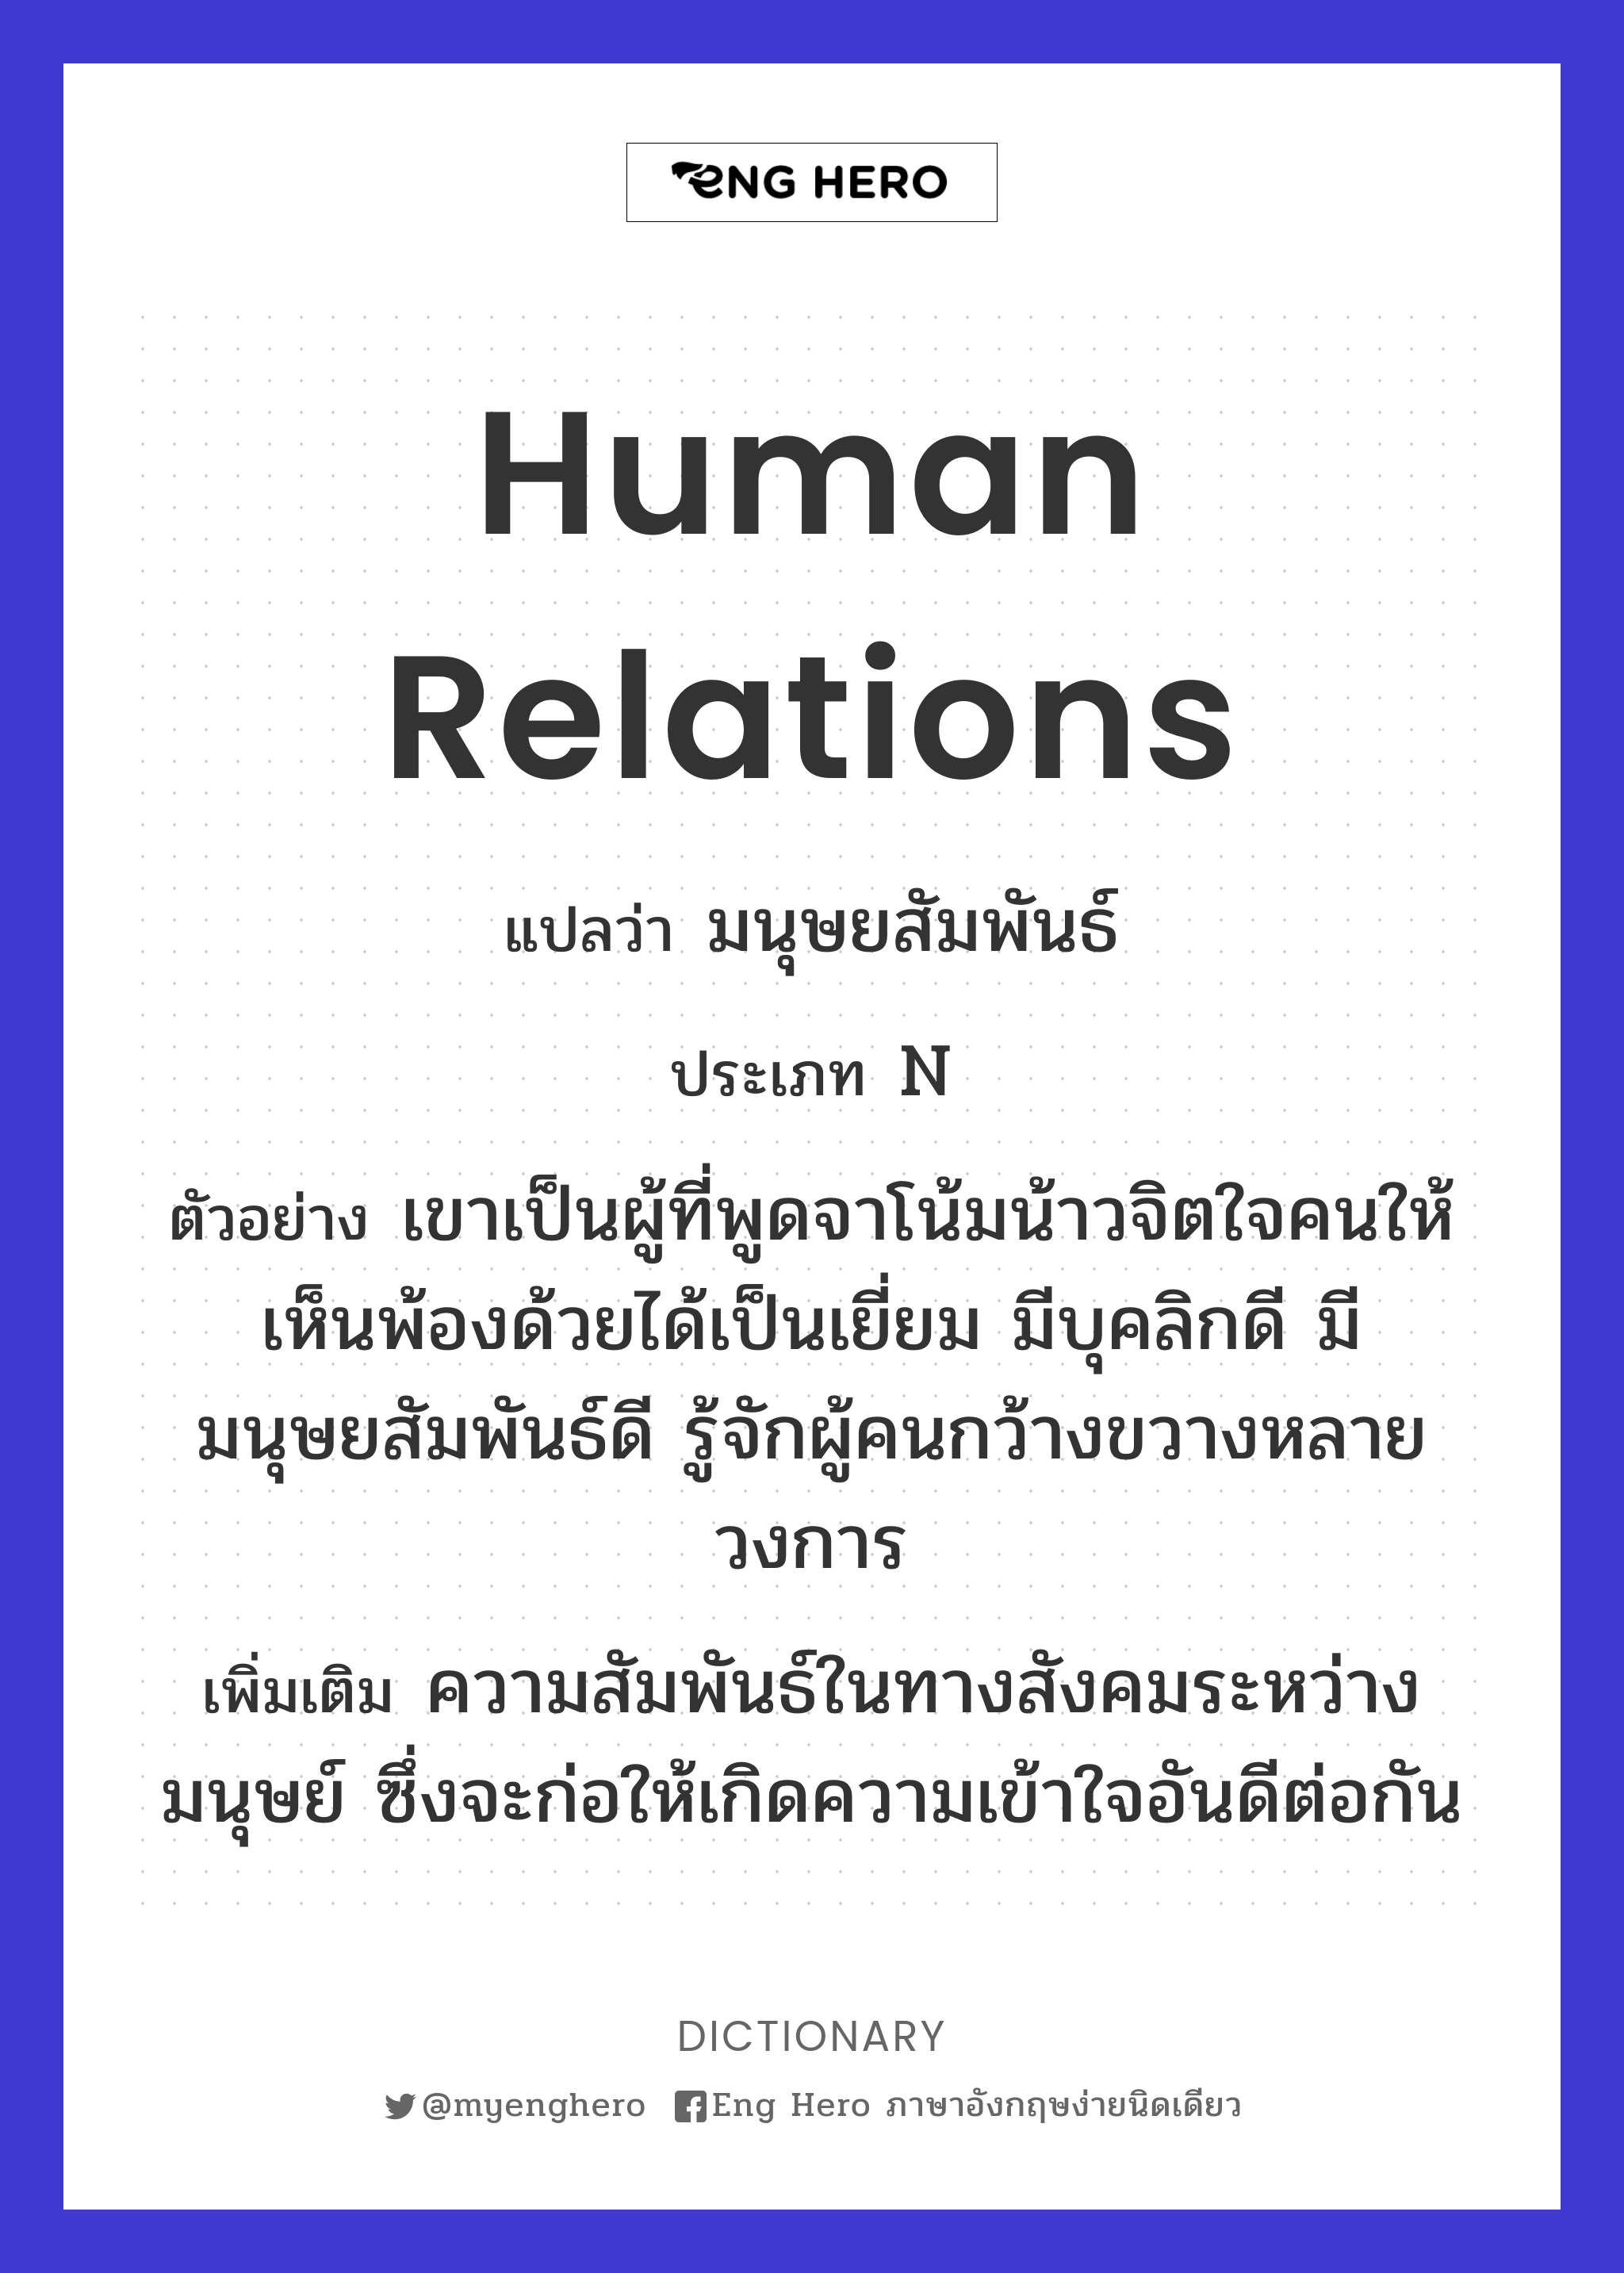 human relations